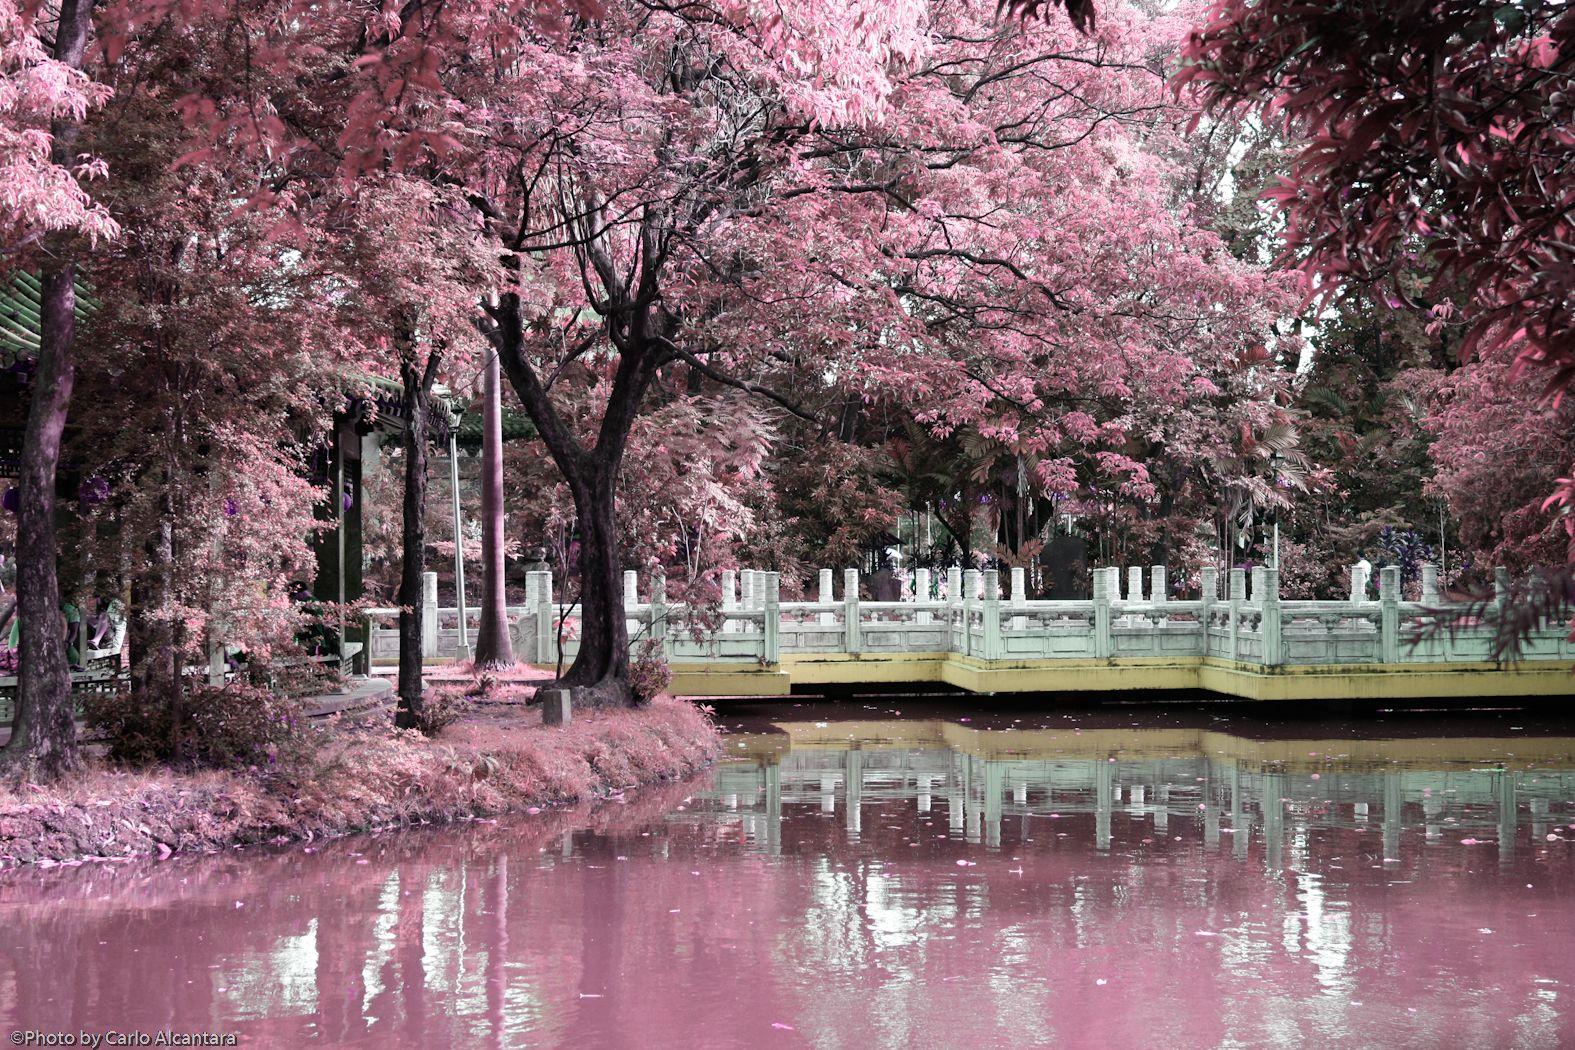 Beautiful. Chinese garden, Japanese garden, Chinese landscape